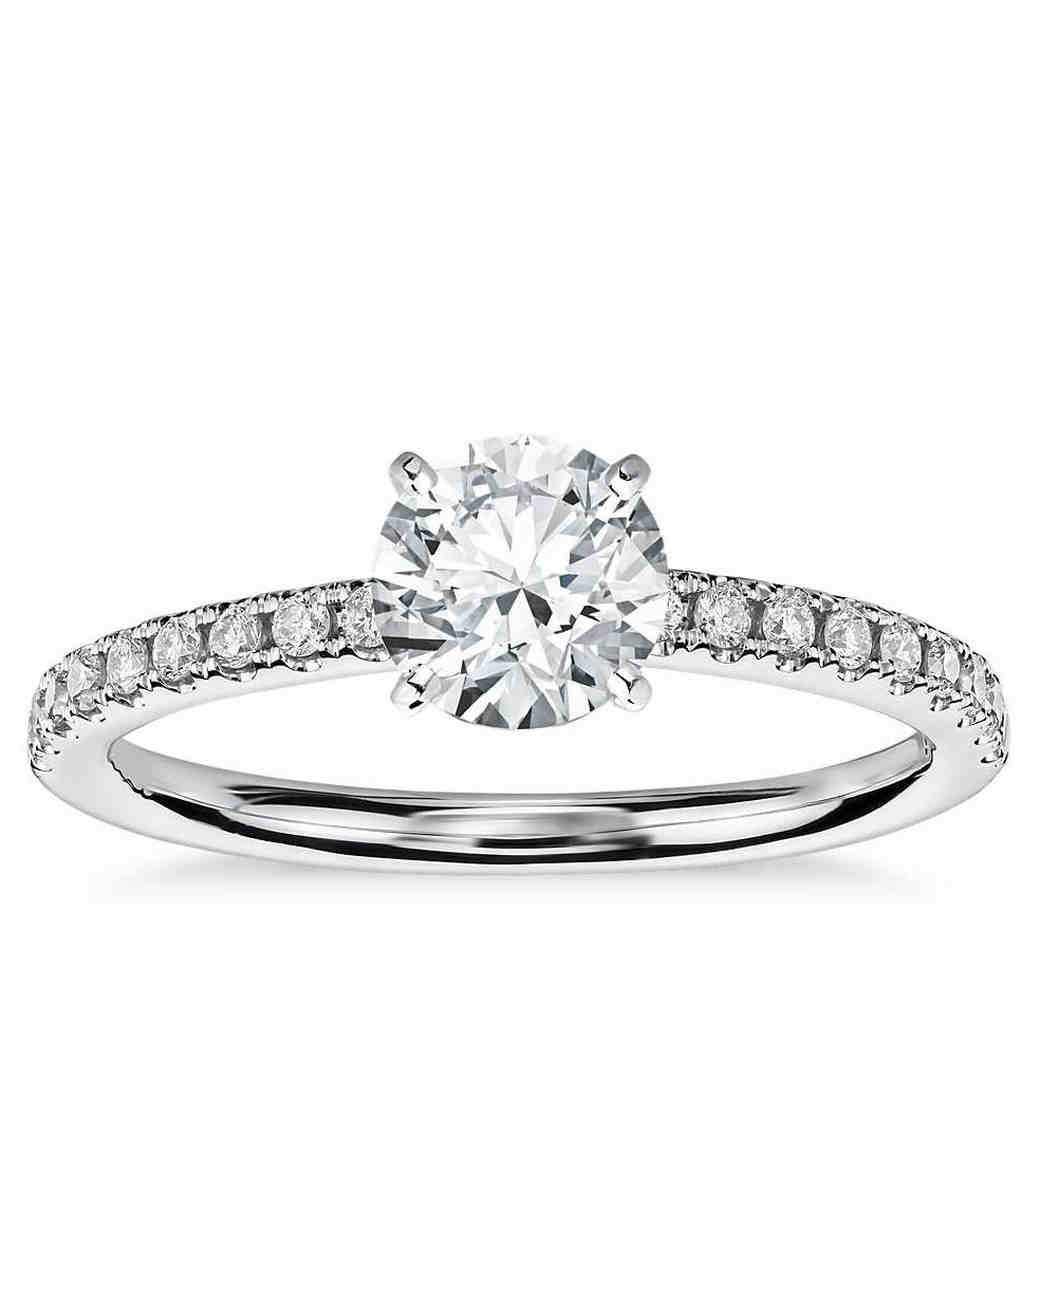 The Prettiest Round-Cut Diamond Engagement Rings | Martha Stewart Weddings